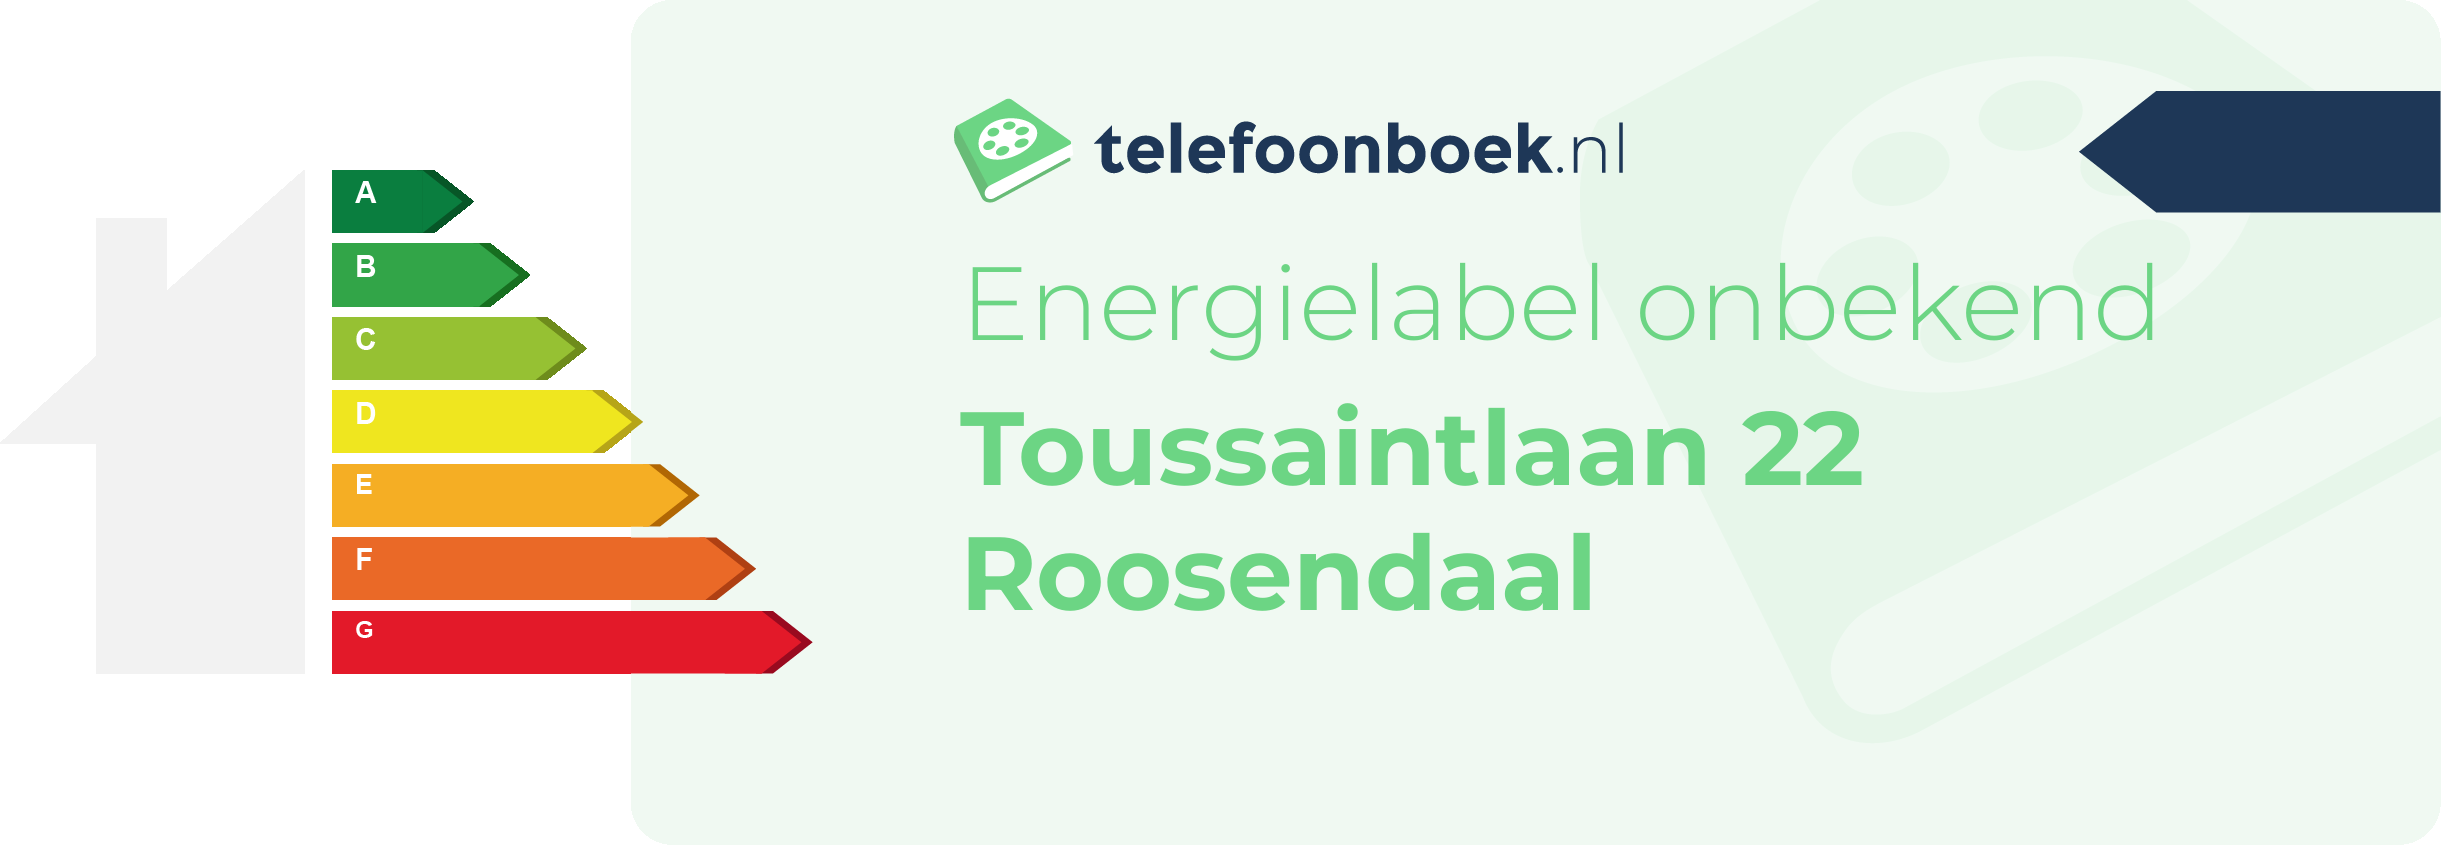 Energielabel Toussaintlaan 22 Roosendaal